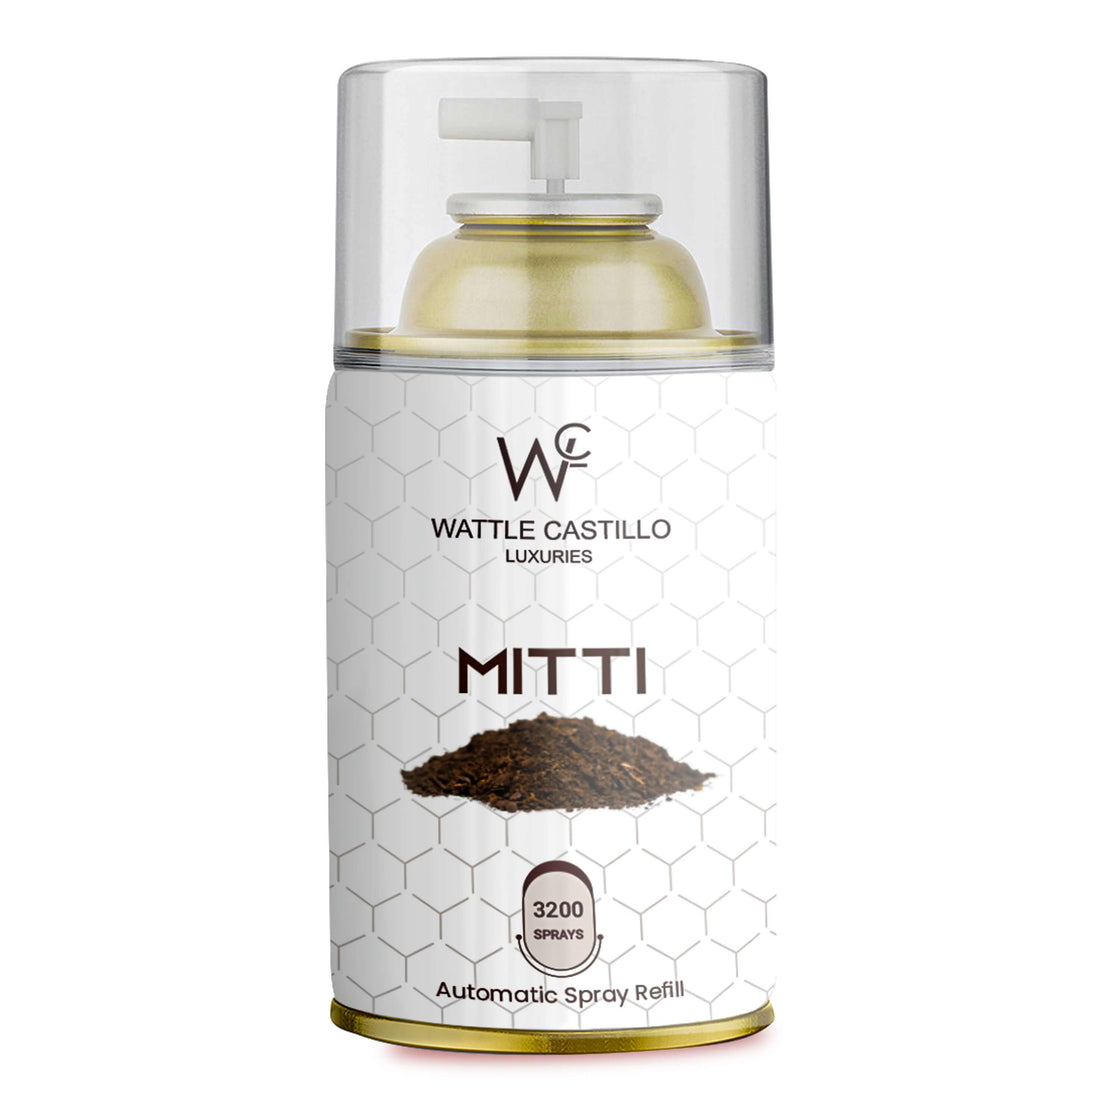 Wattle castillo Automatic Dispenser Refill - Automatic Room Fresheners Combo | Lemon leaf and mitti (300ml) - Wattle Castillo